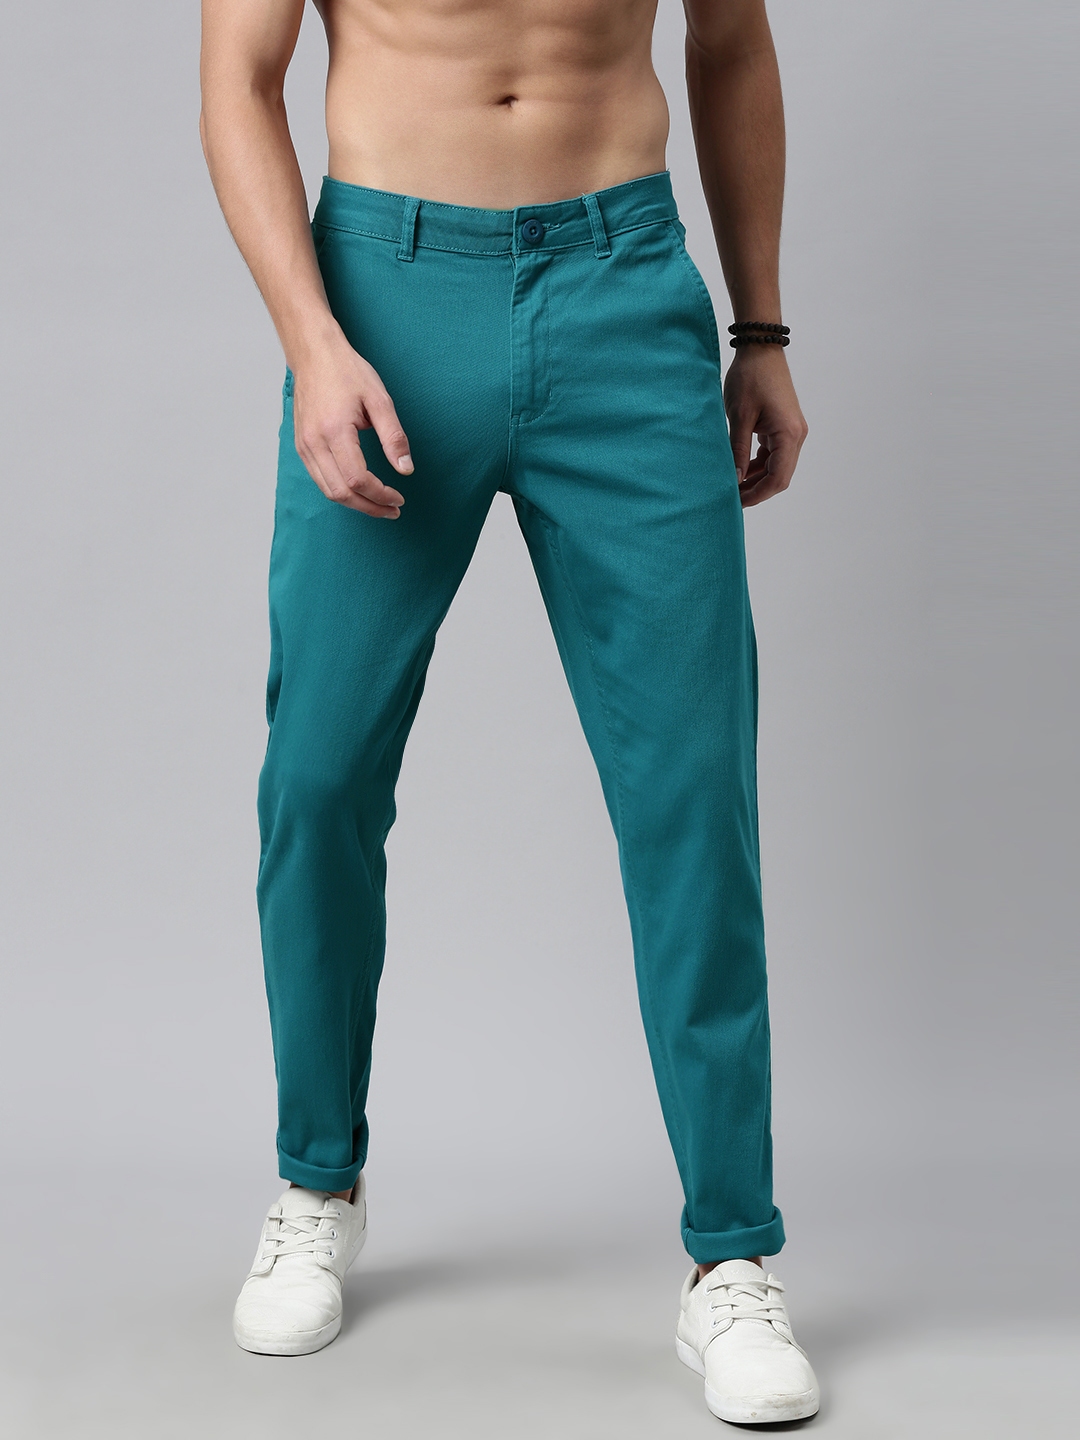 Buy Roadster Men Blue Regular Trousers - Trousers for Men 13859240 | Myntra